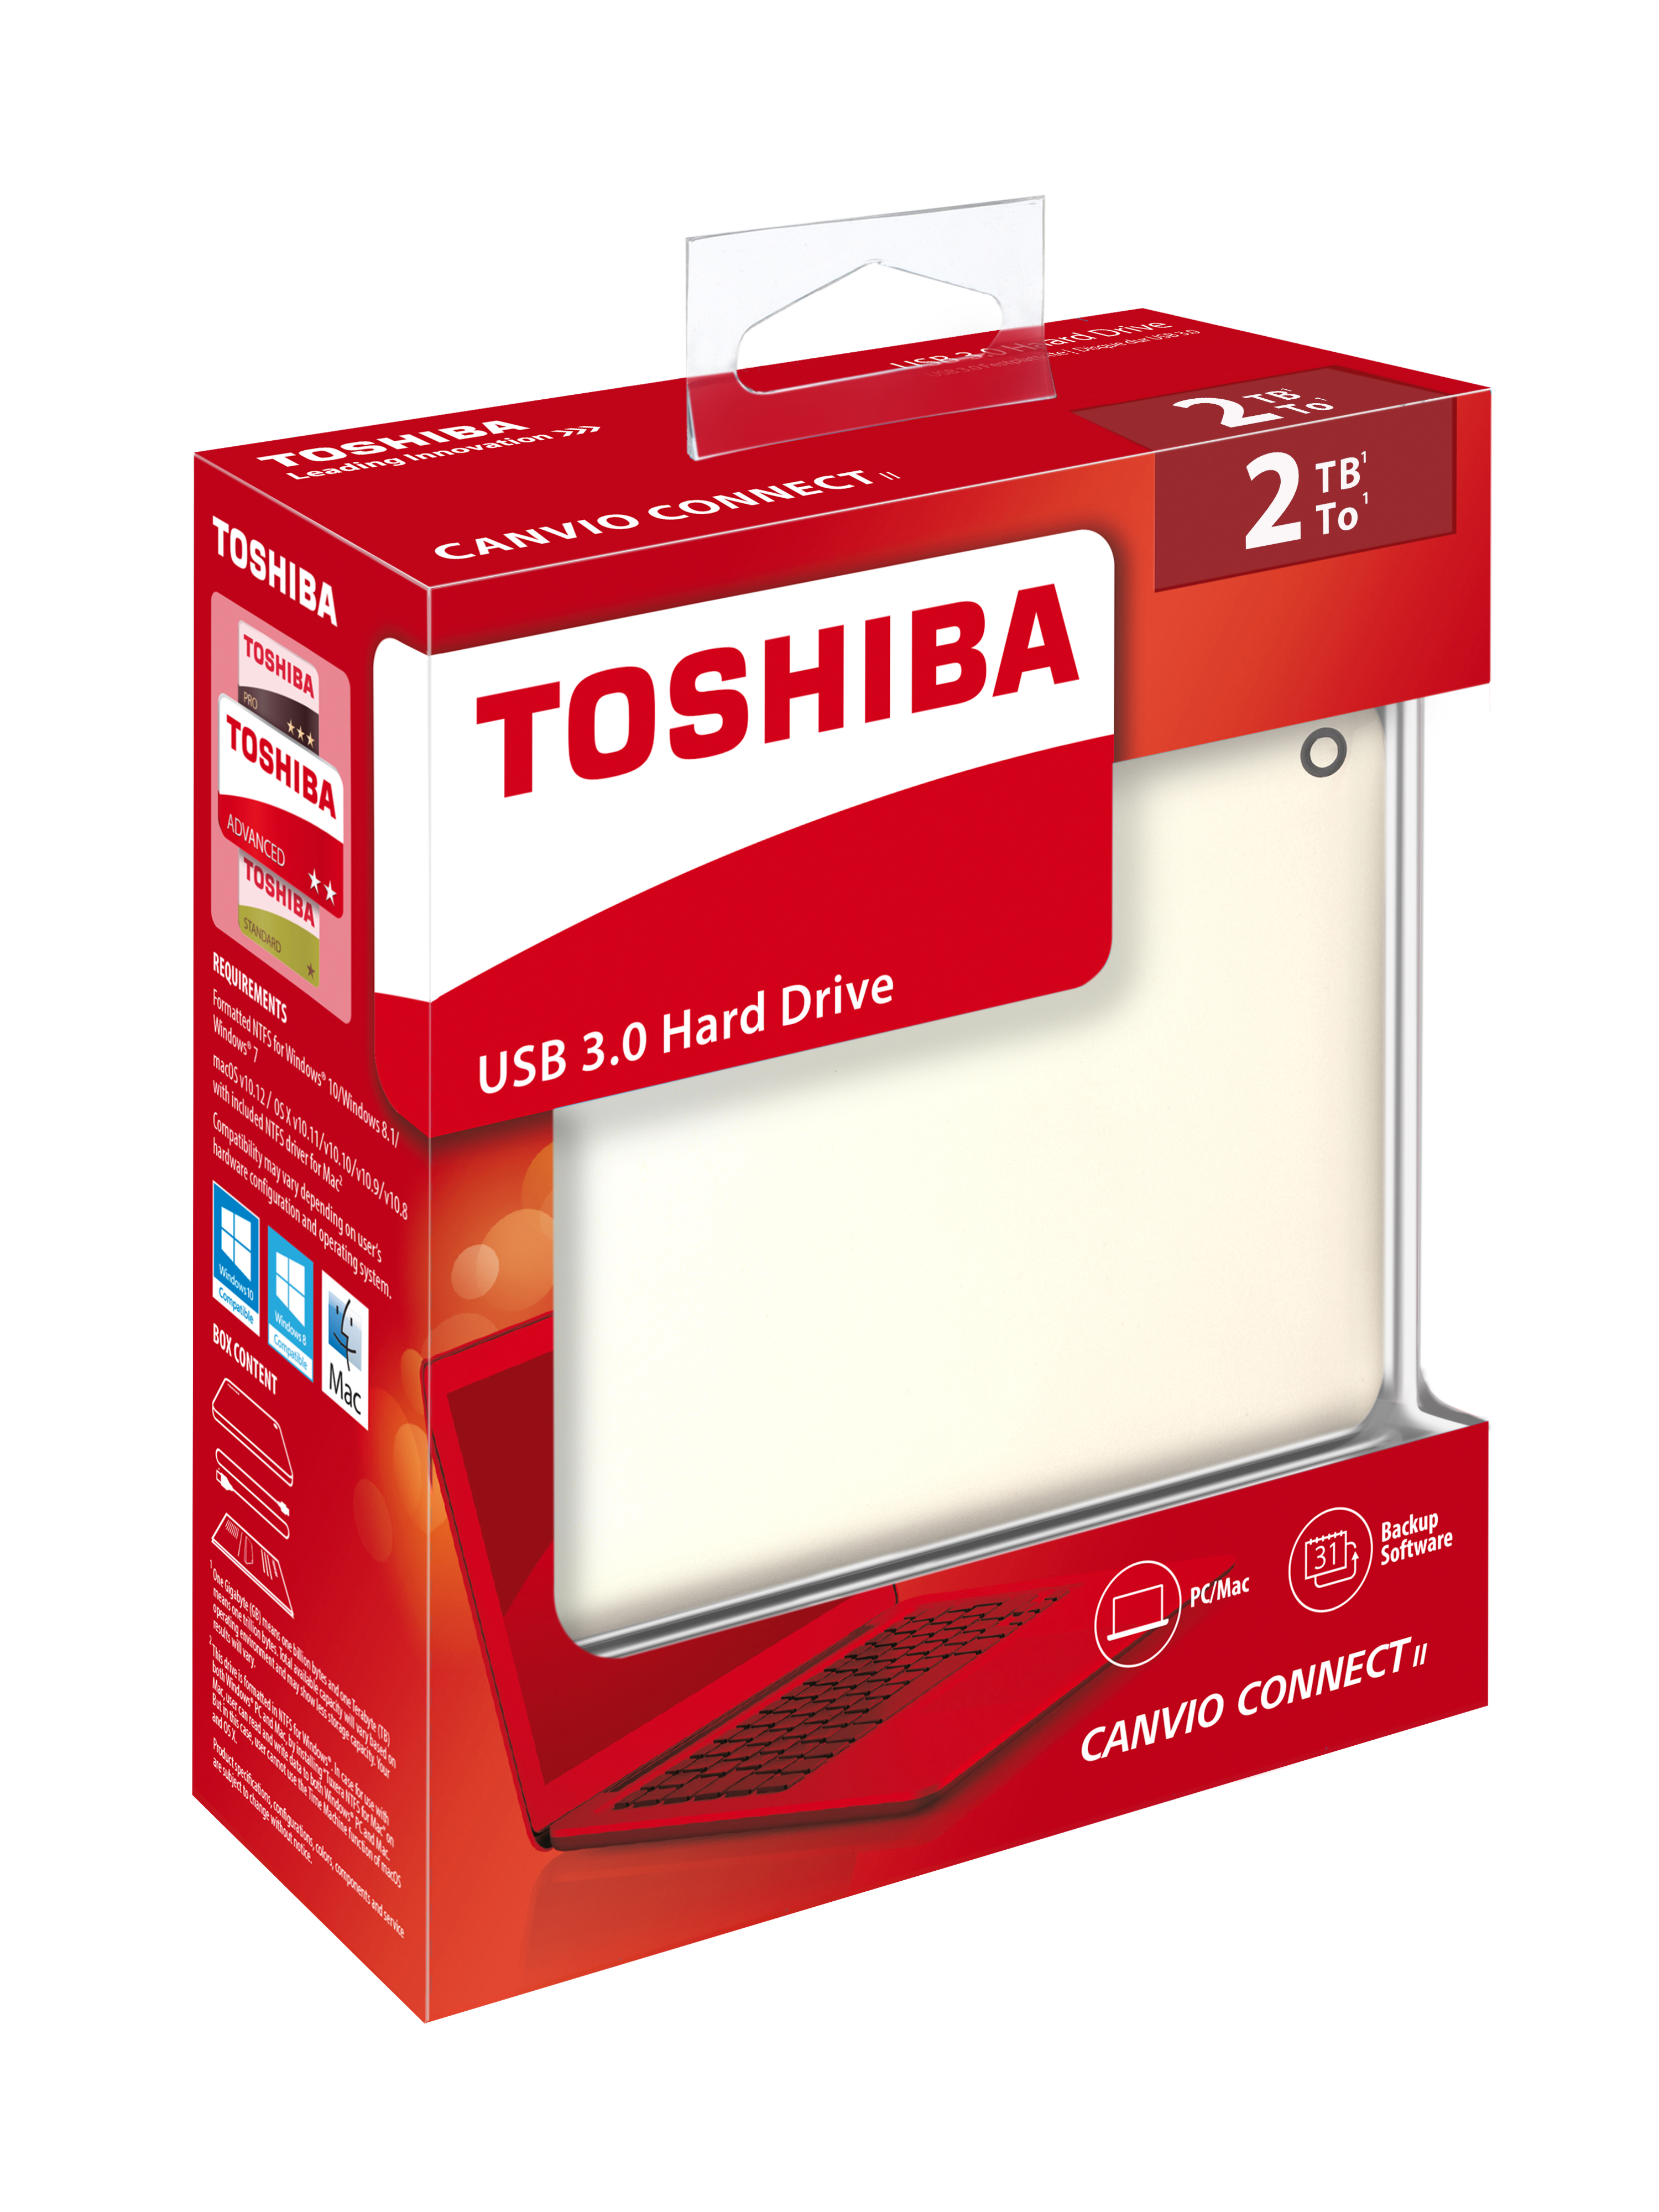 TOSHIBA Canvio Connect extern, II Gold HDD, Zoll, 2 Festplatte, 2,5 TB